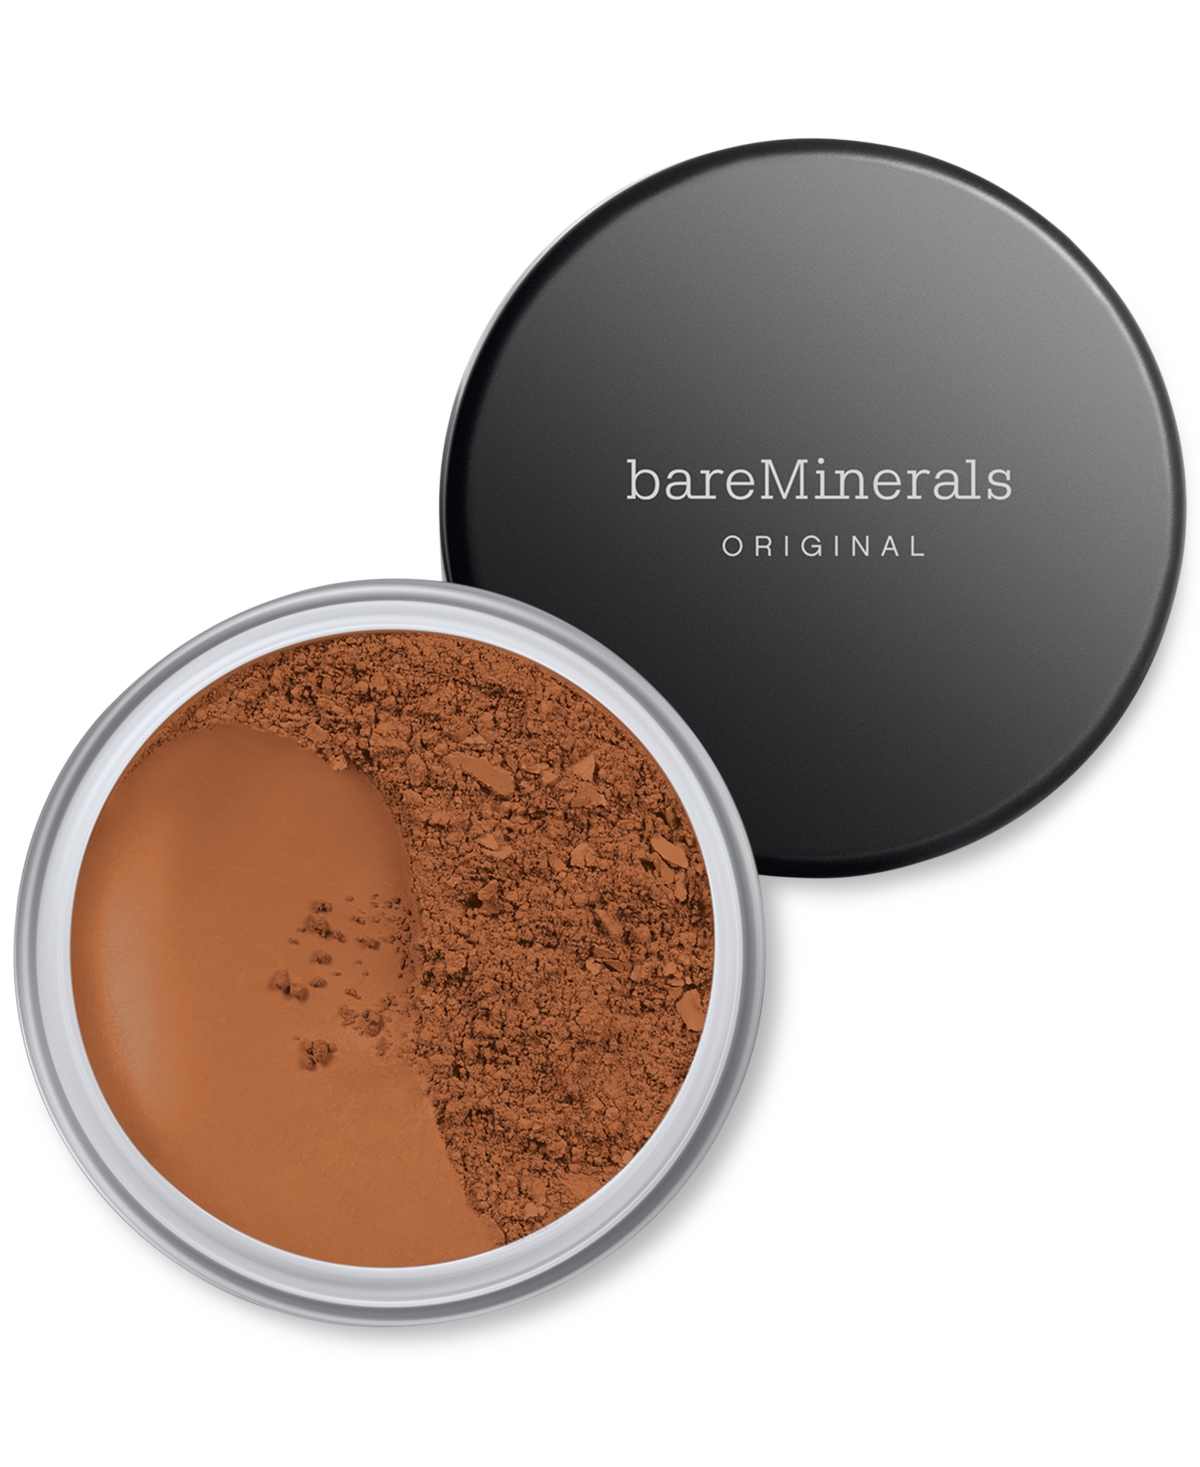 Bareminerals Original Loose Powder Foundation Spf 15 In Warm Deep  - For Dark To Deep Skin With